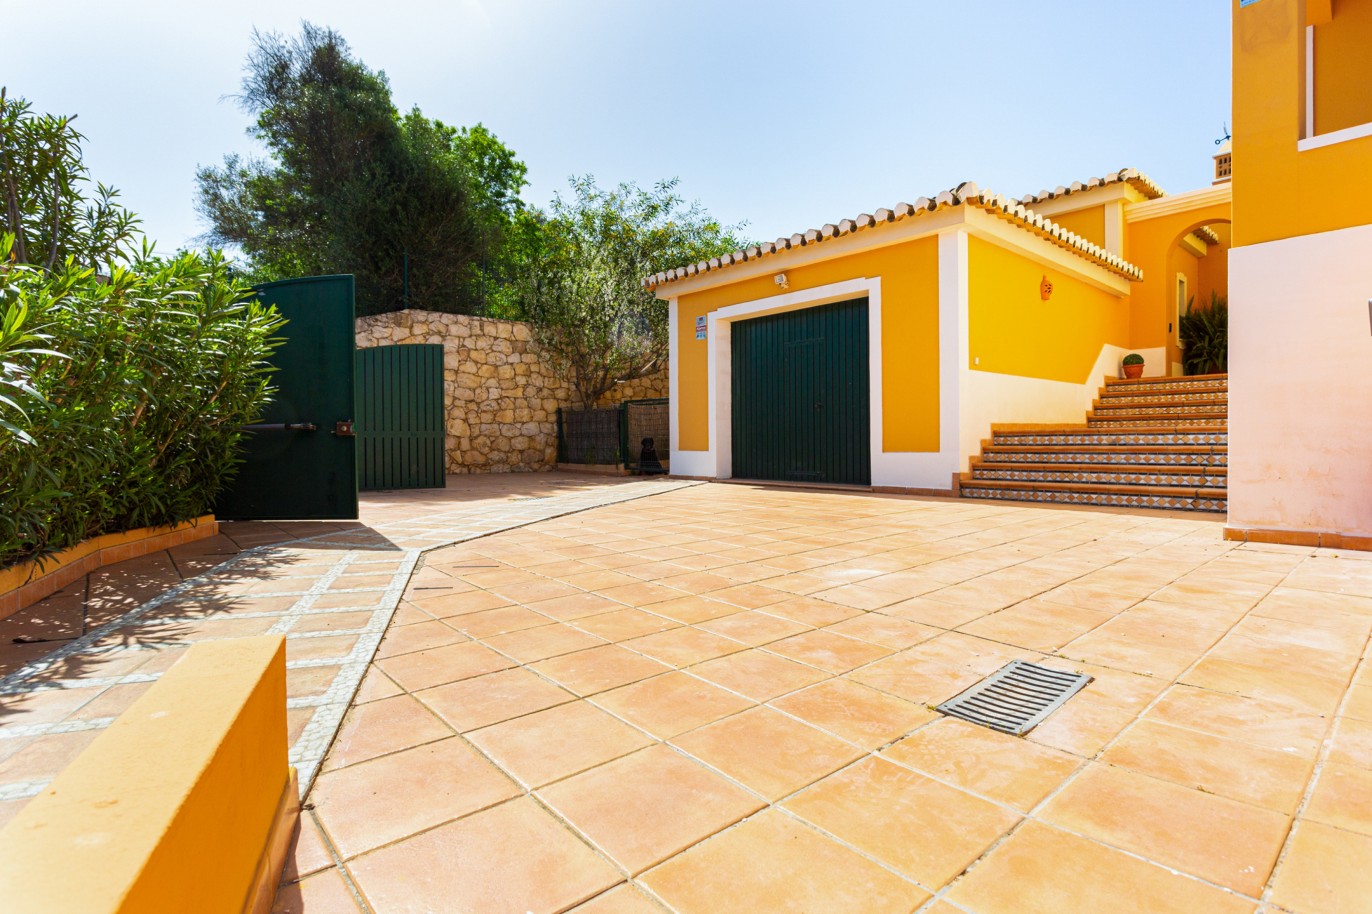 5 Bedroom Villa with 2 Bedroom Annex, for sale, in Alvor, Algarve_220959